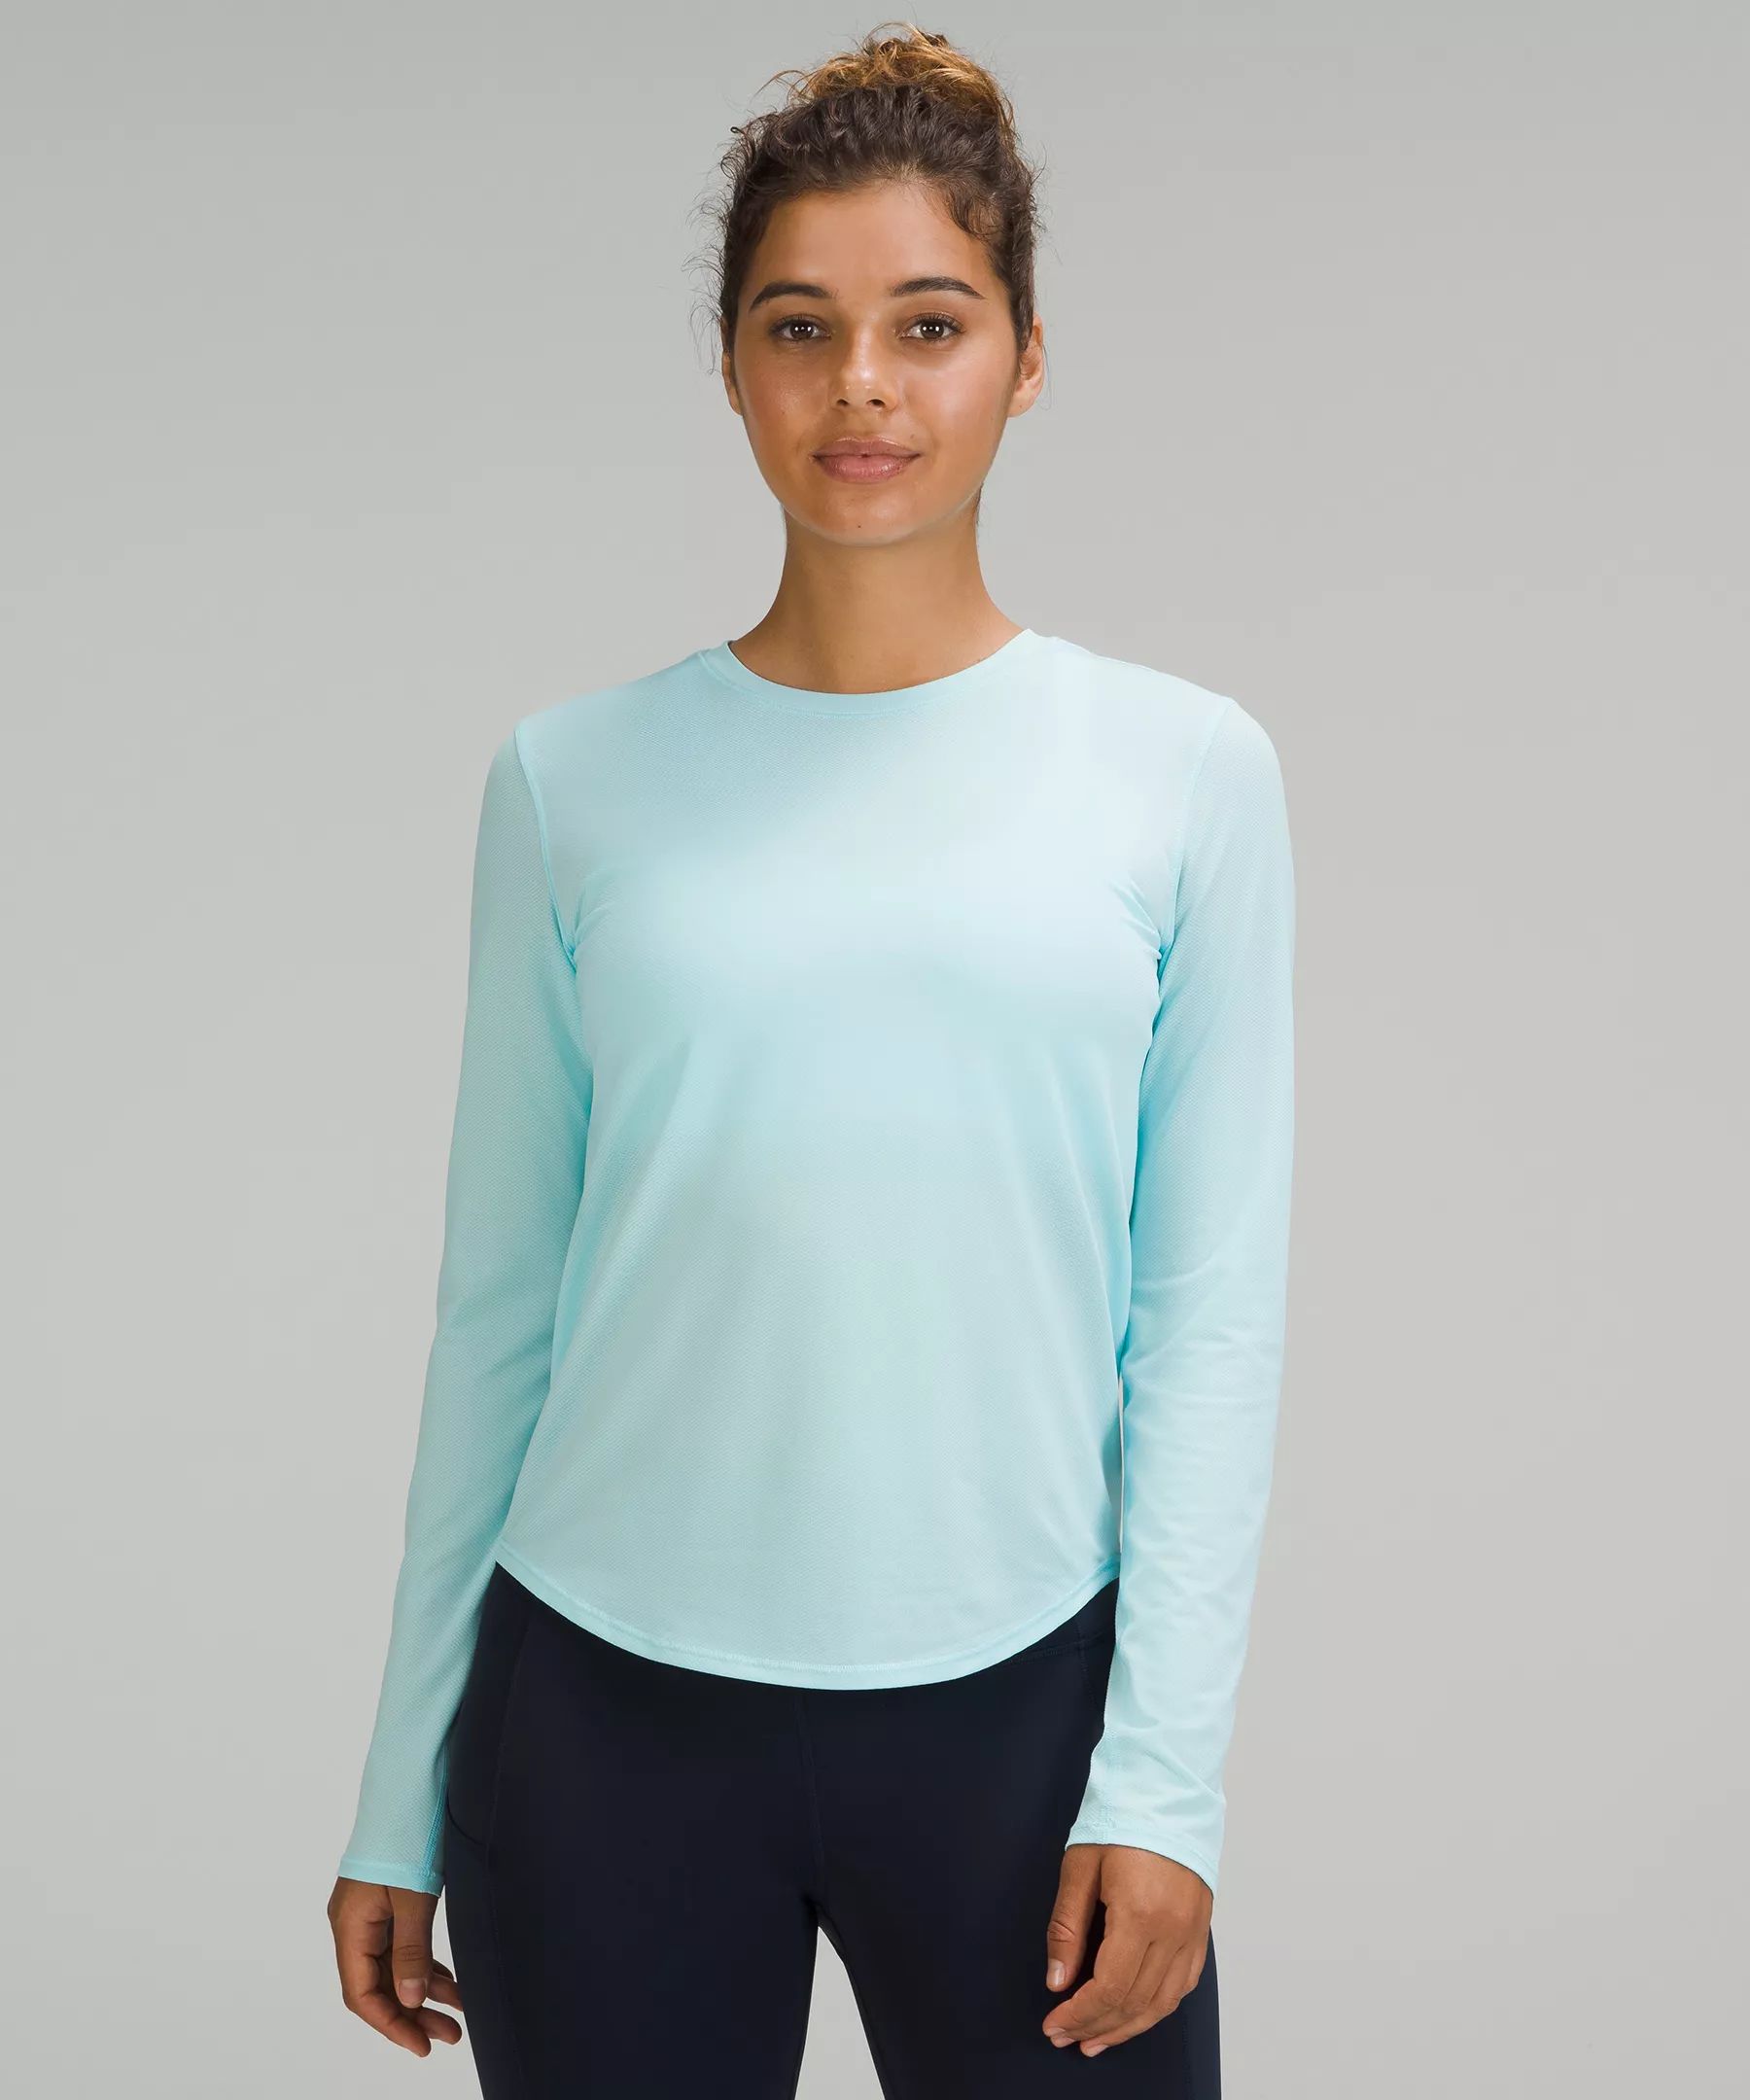 High-Neck Running and Training Long Sleeve Shirt | Lululemon (US)